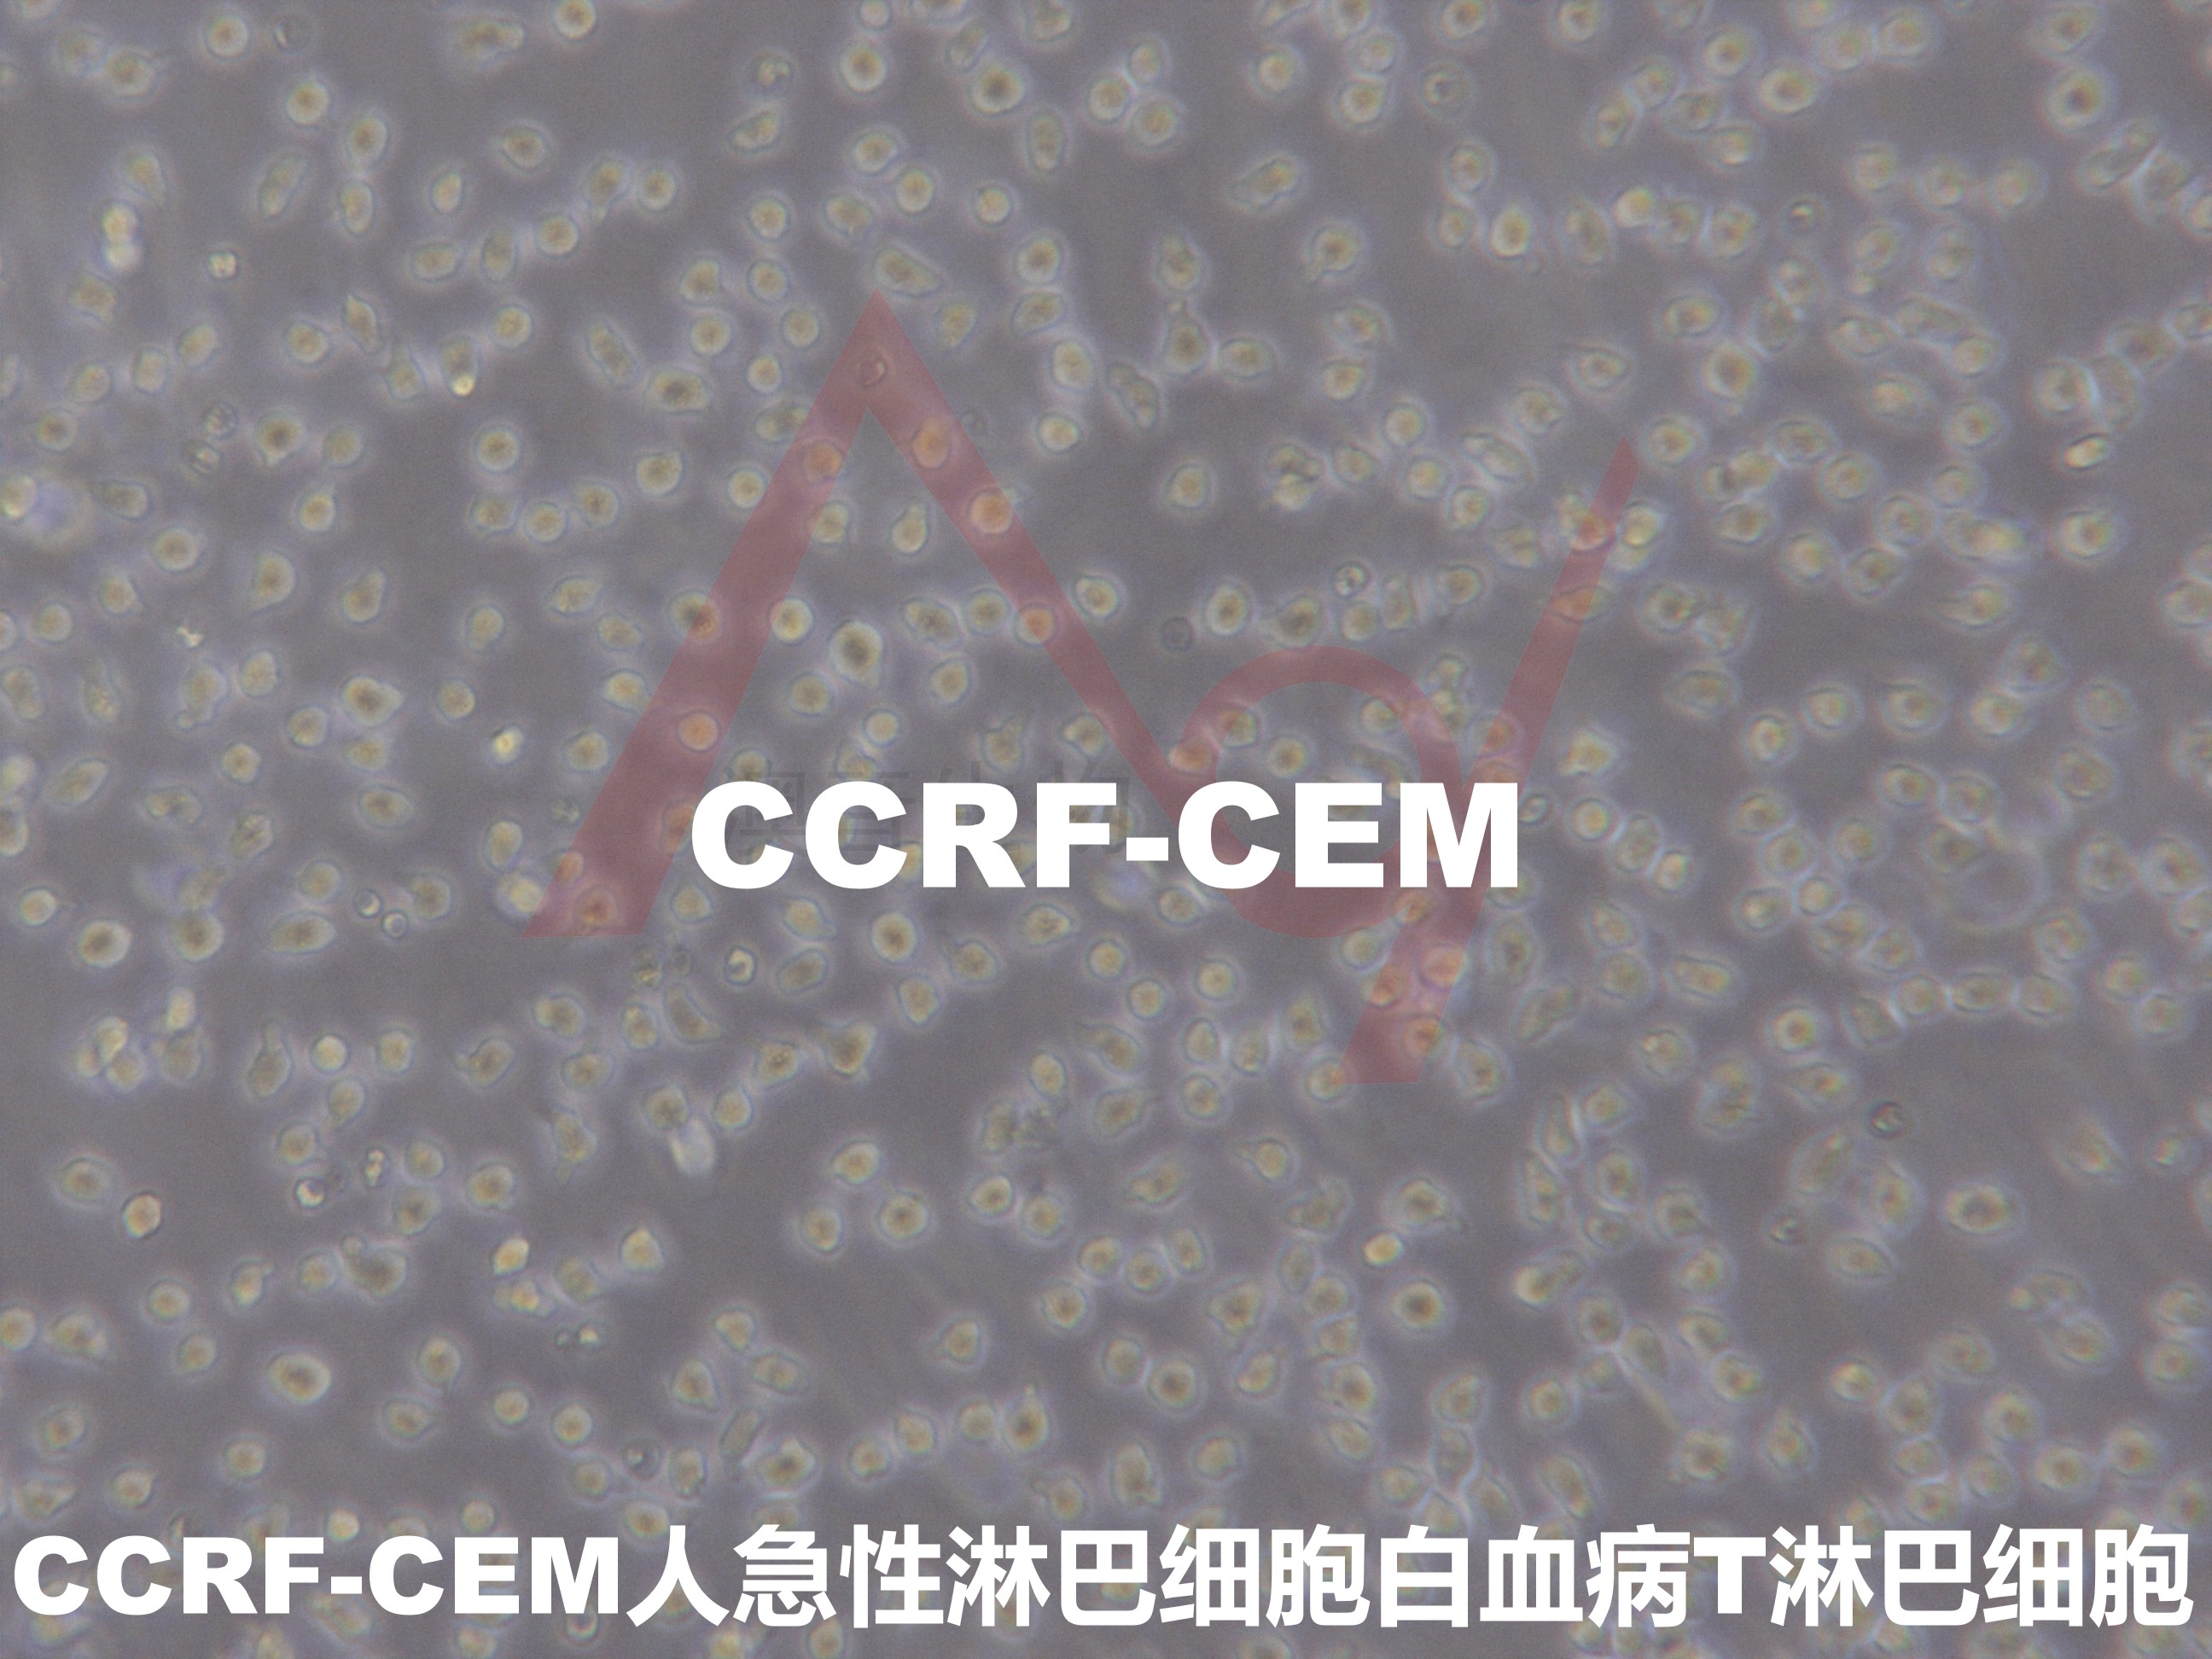 CCRF-CEM [CCRF/CEM; CCRFCEM; CCRF.CEM; CCRF CEM; CCRF; CEM; CEM-CCRF; CEM-CCRF (CAMR); CCRF/CEM/0; CEM/0; CEM-0; CCRF-CEM/S; GM03671; GM03671C]人急性淋巴细胞白血病T淋巴细胞